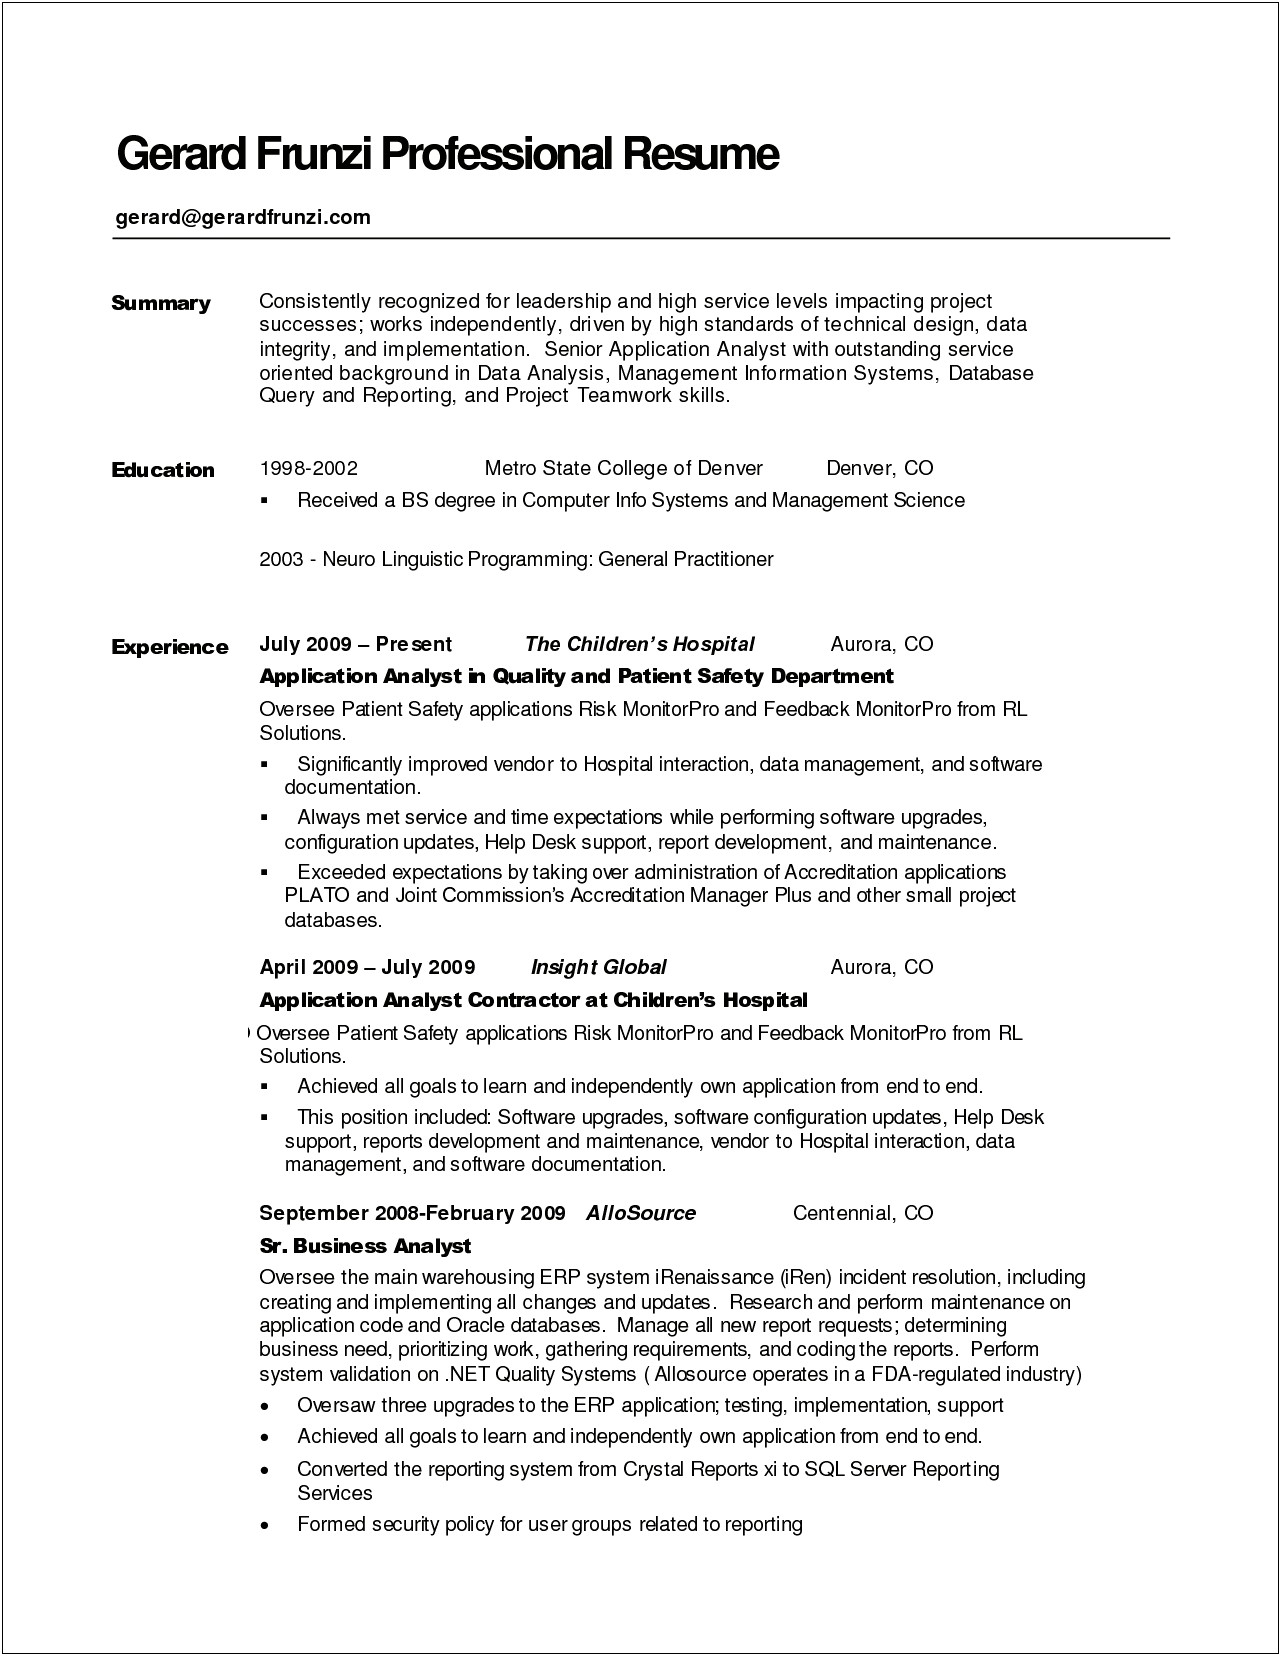 Resume Profile Summary Of Public Health